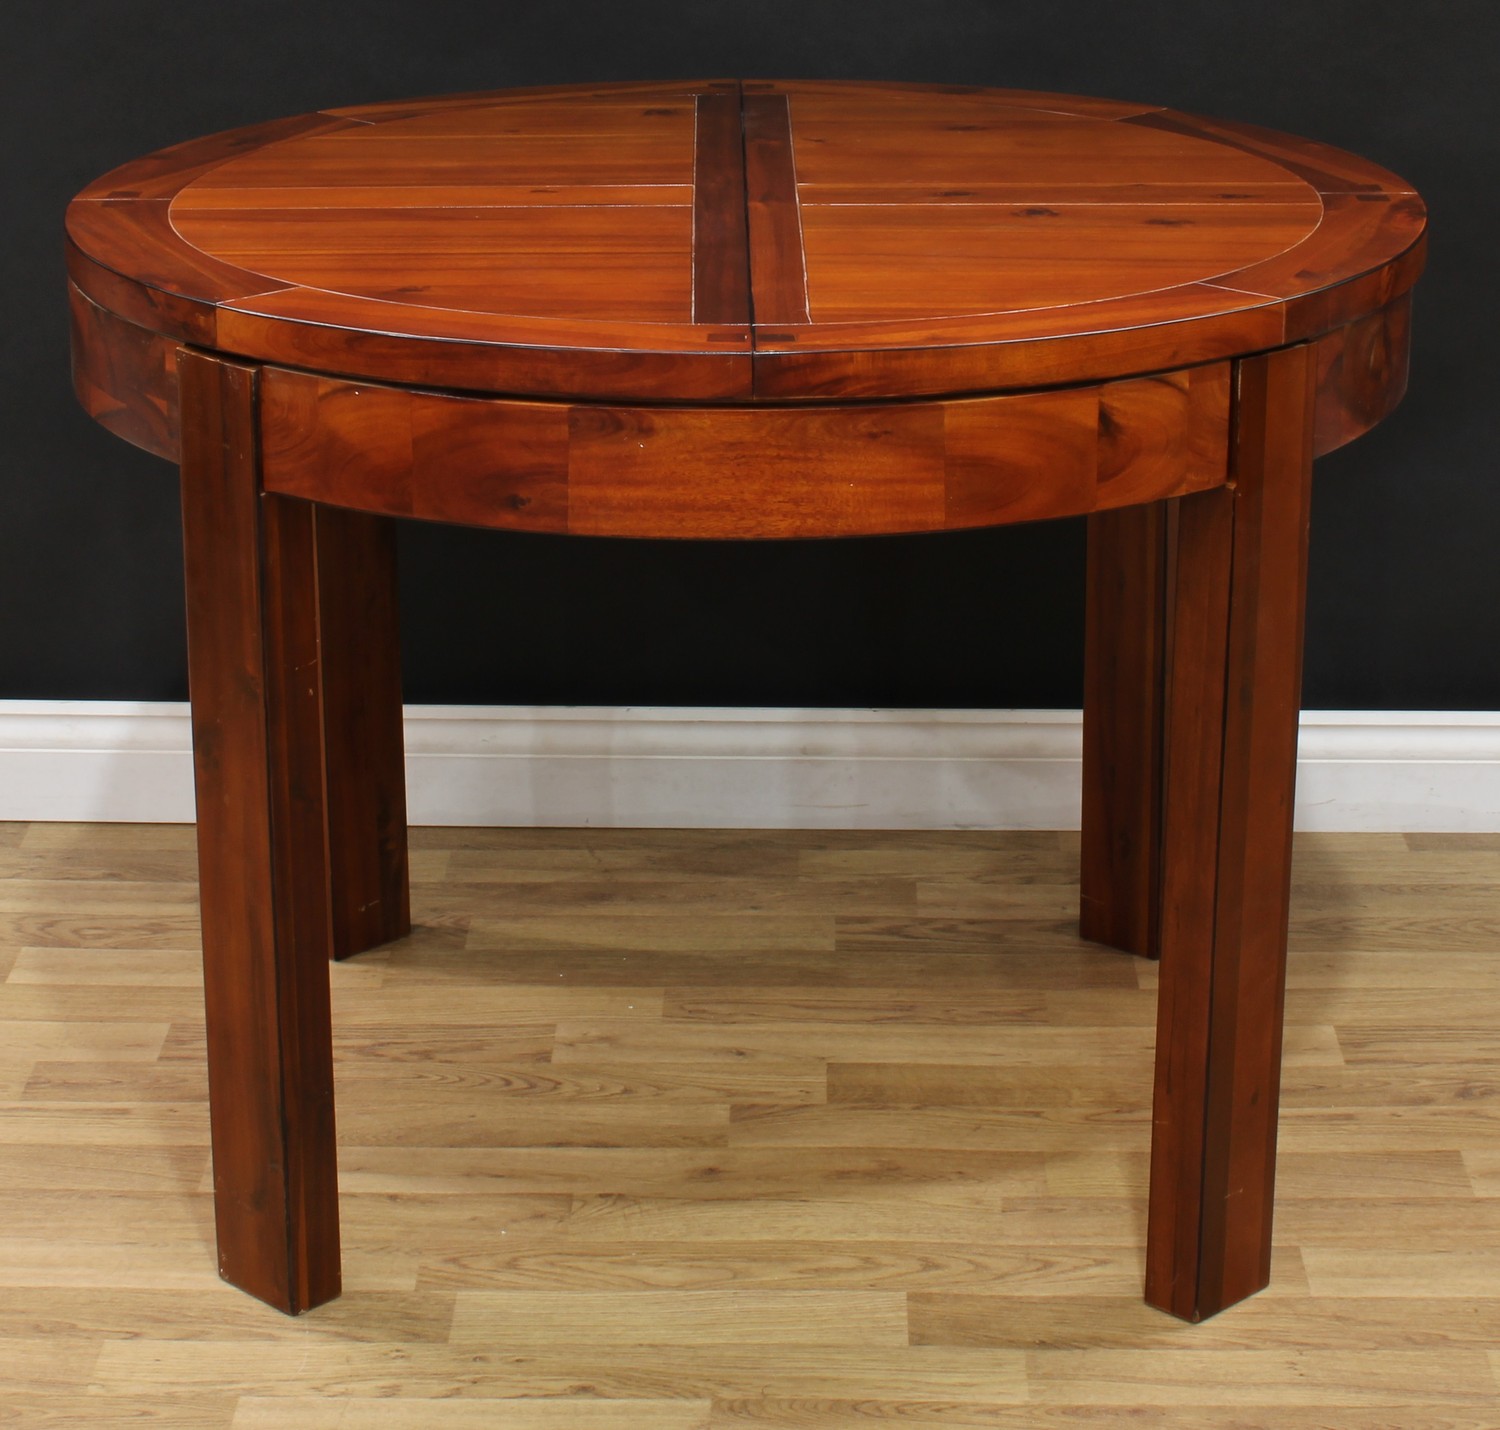 A Mark Webster Designs extending dining table, Kember range, 76cm high, 104.5cm diameter, - Image 2 of 2